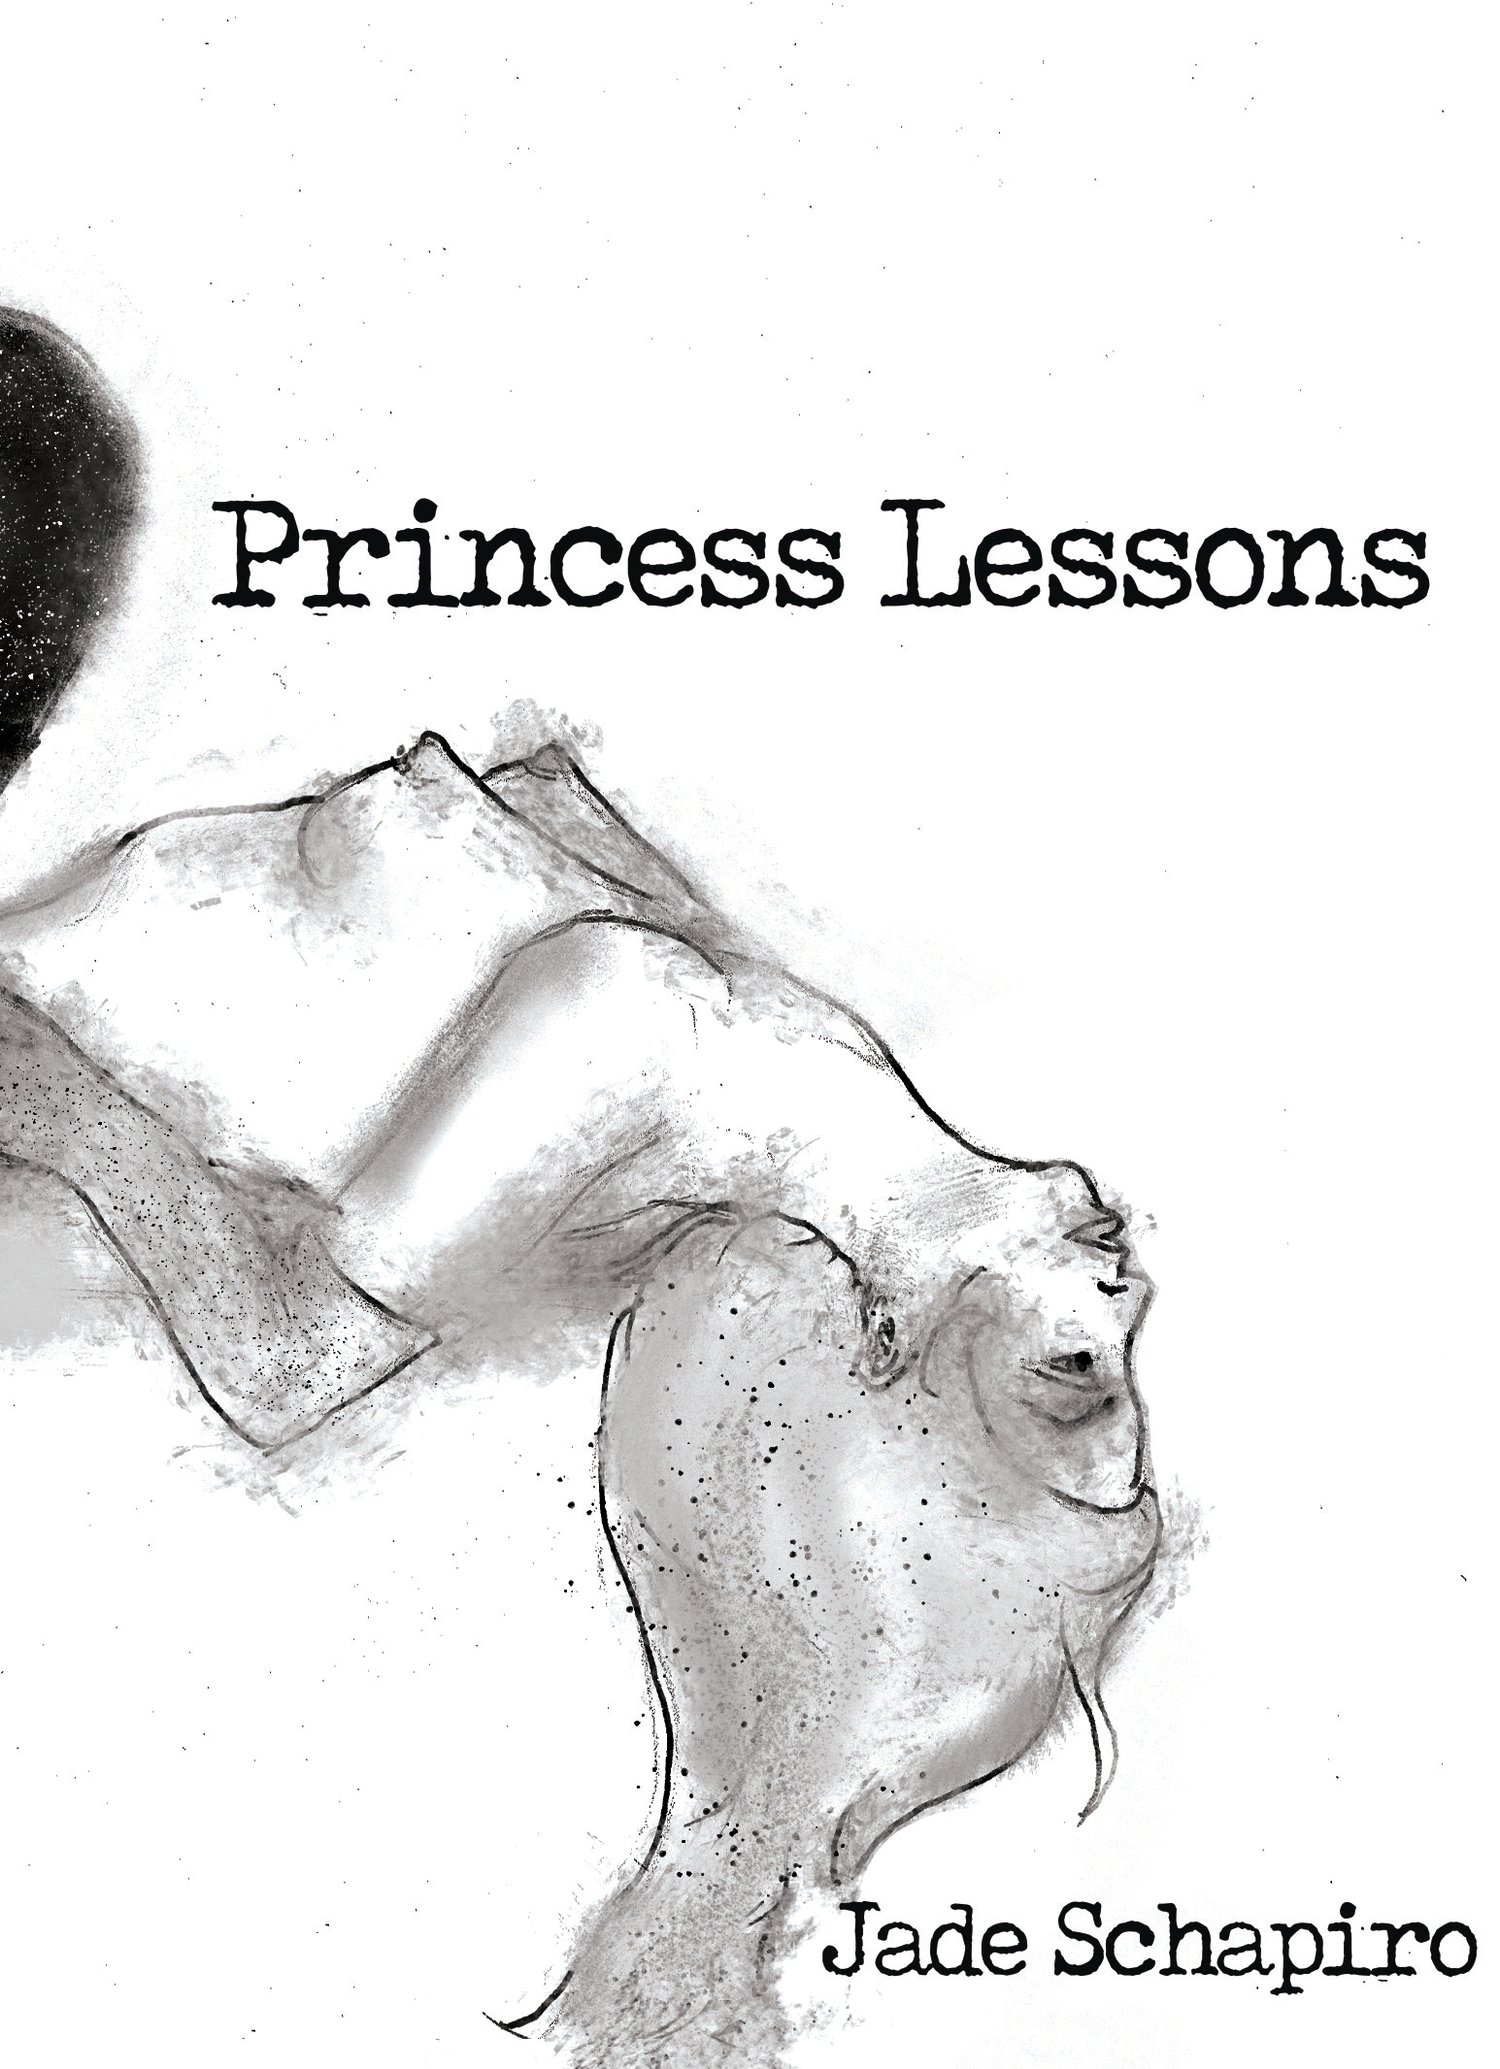 Image of Princess Lessons by Jade Schapiro